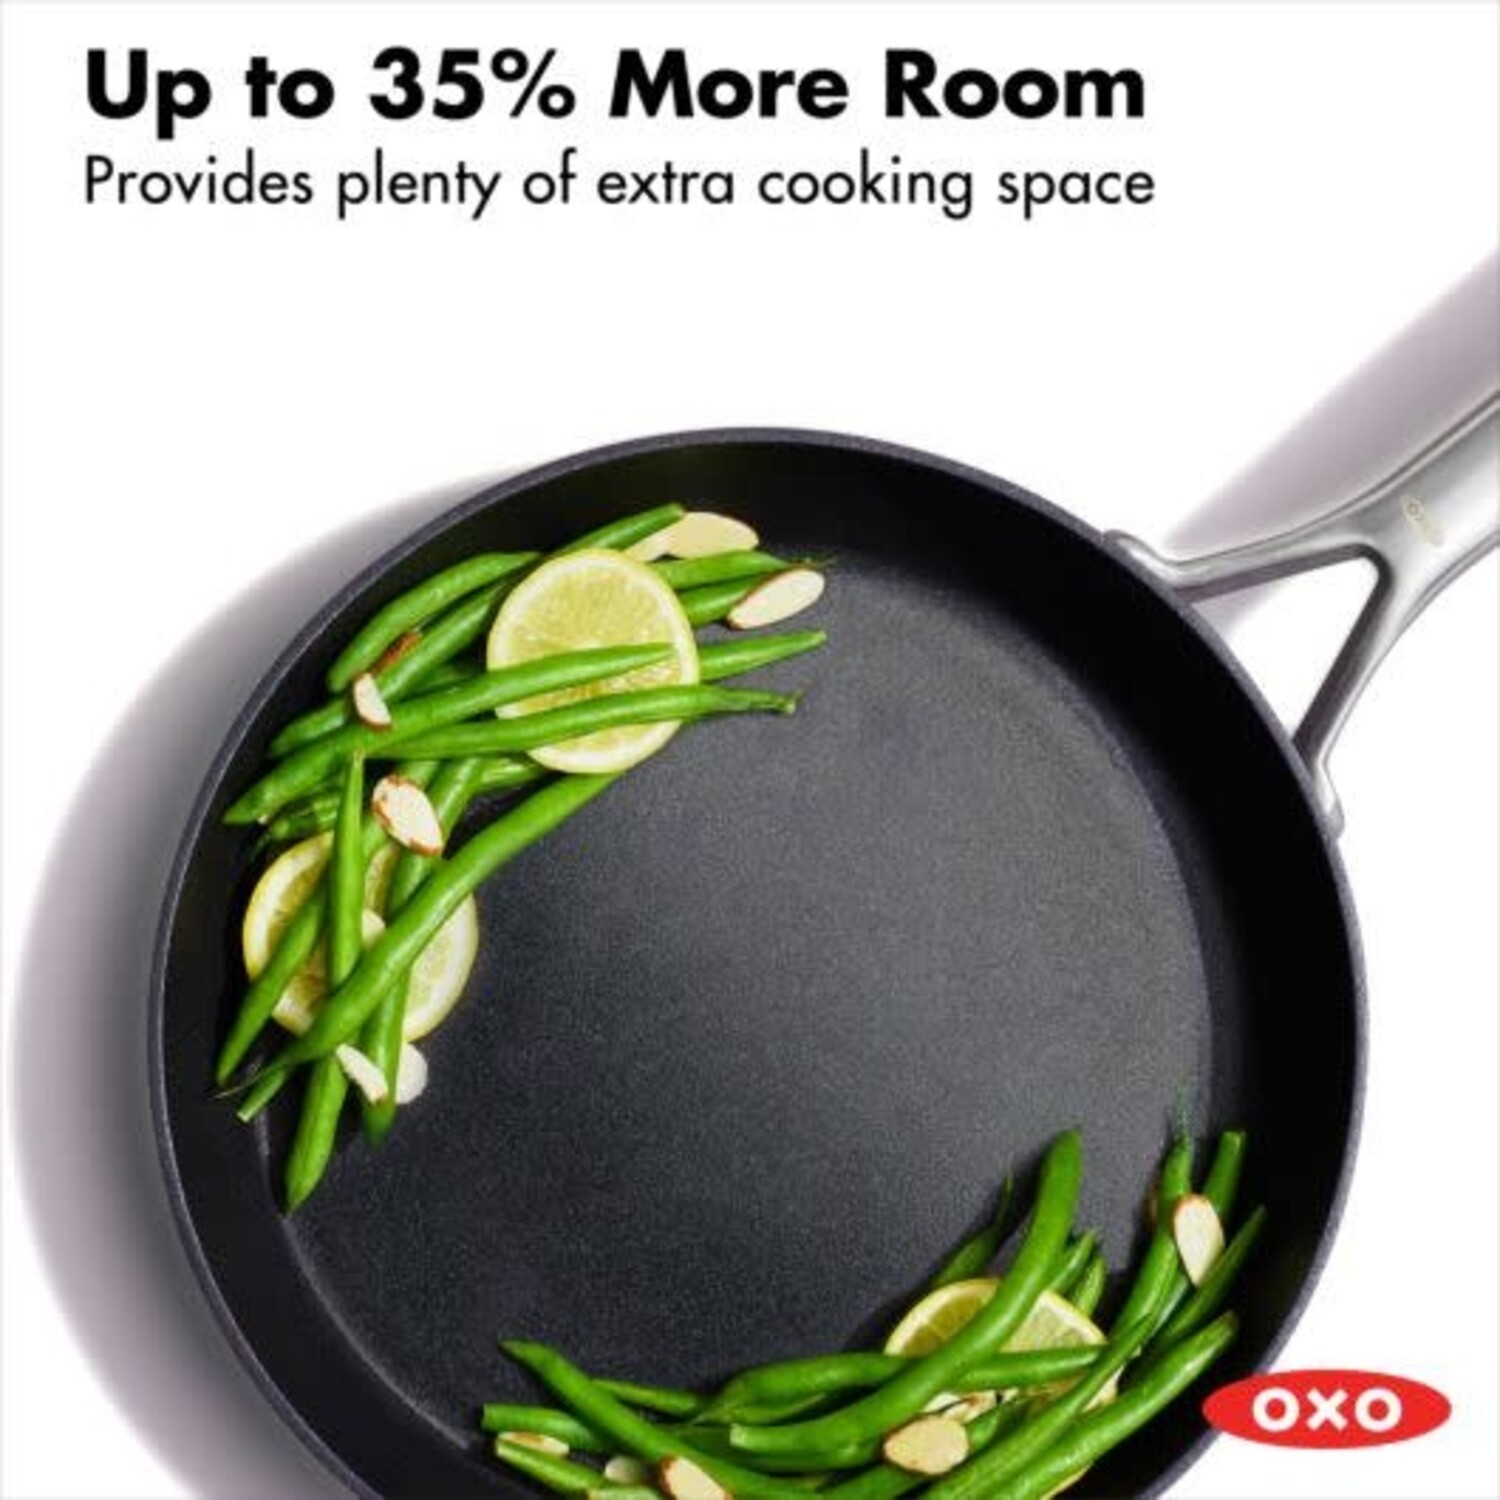 OXO Ceramic Nonstick 10-inch Fry Pan